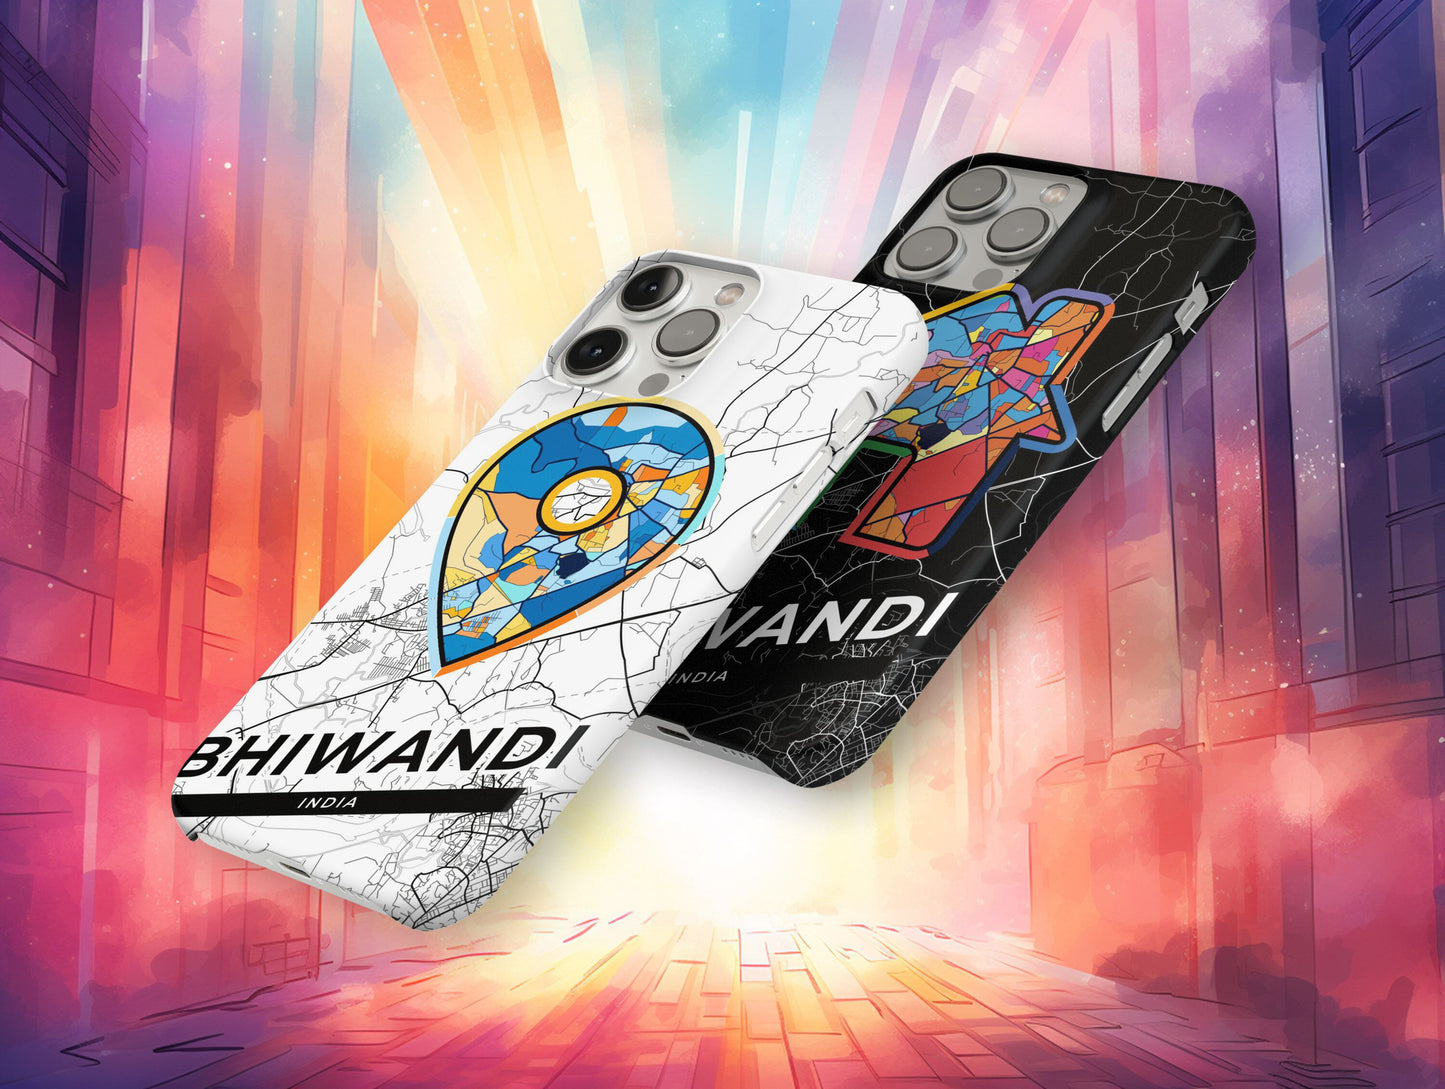 Bhiwandi India slim phone case with colorful icon. Birthday, wedding or housewarming gift. Couple match cases.